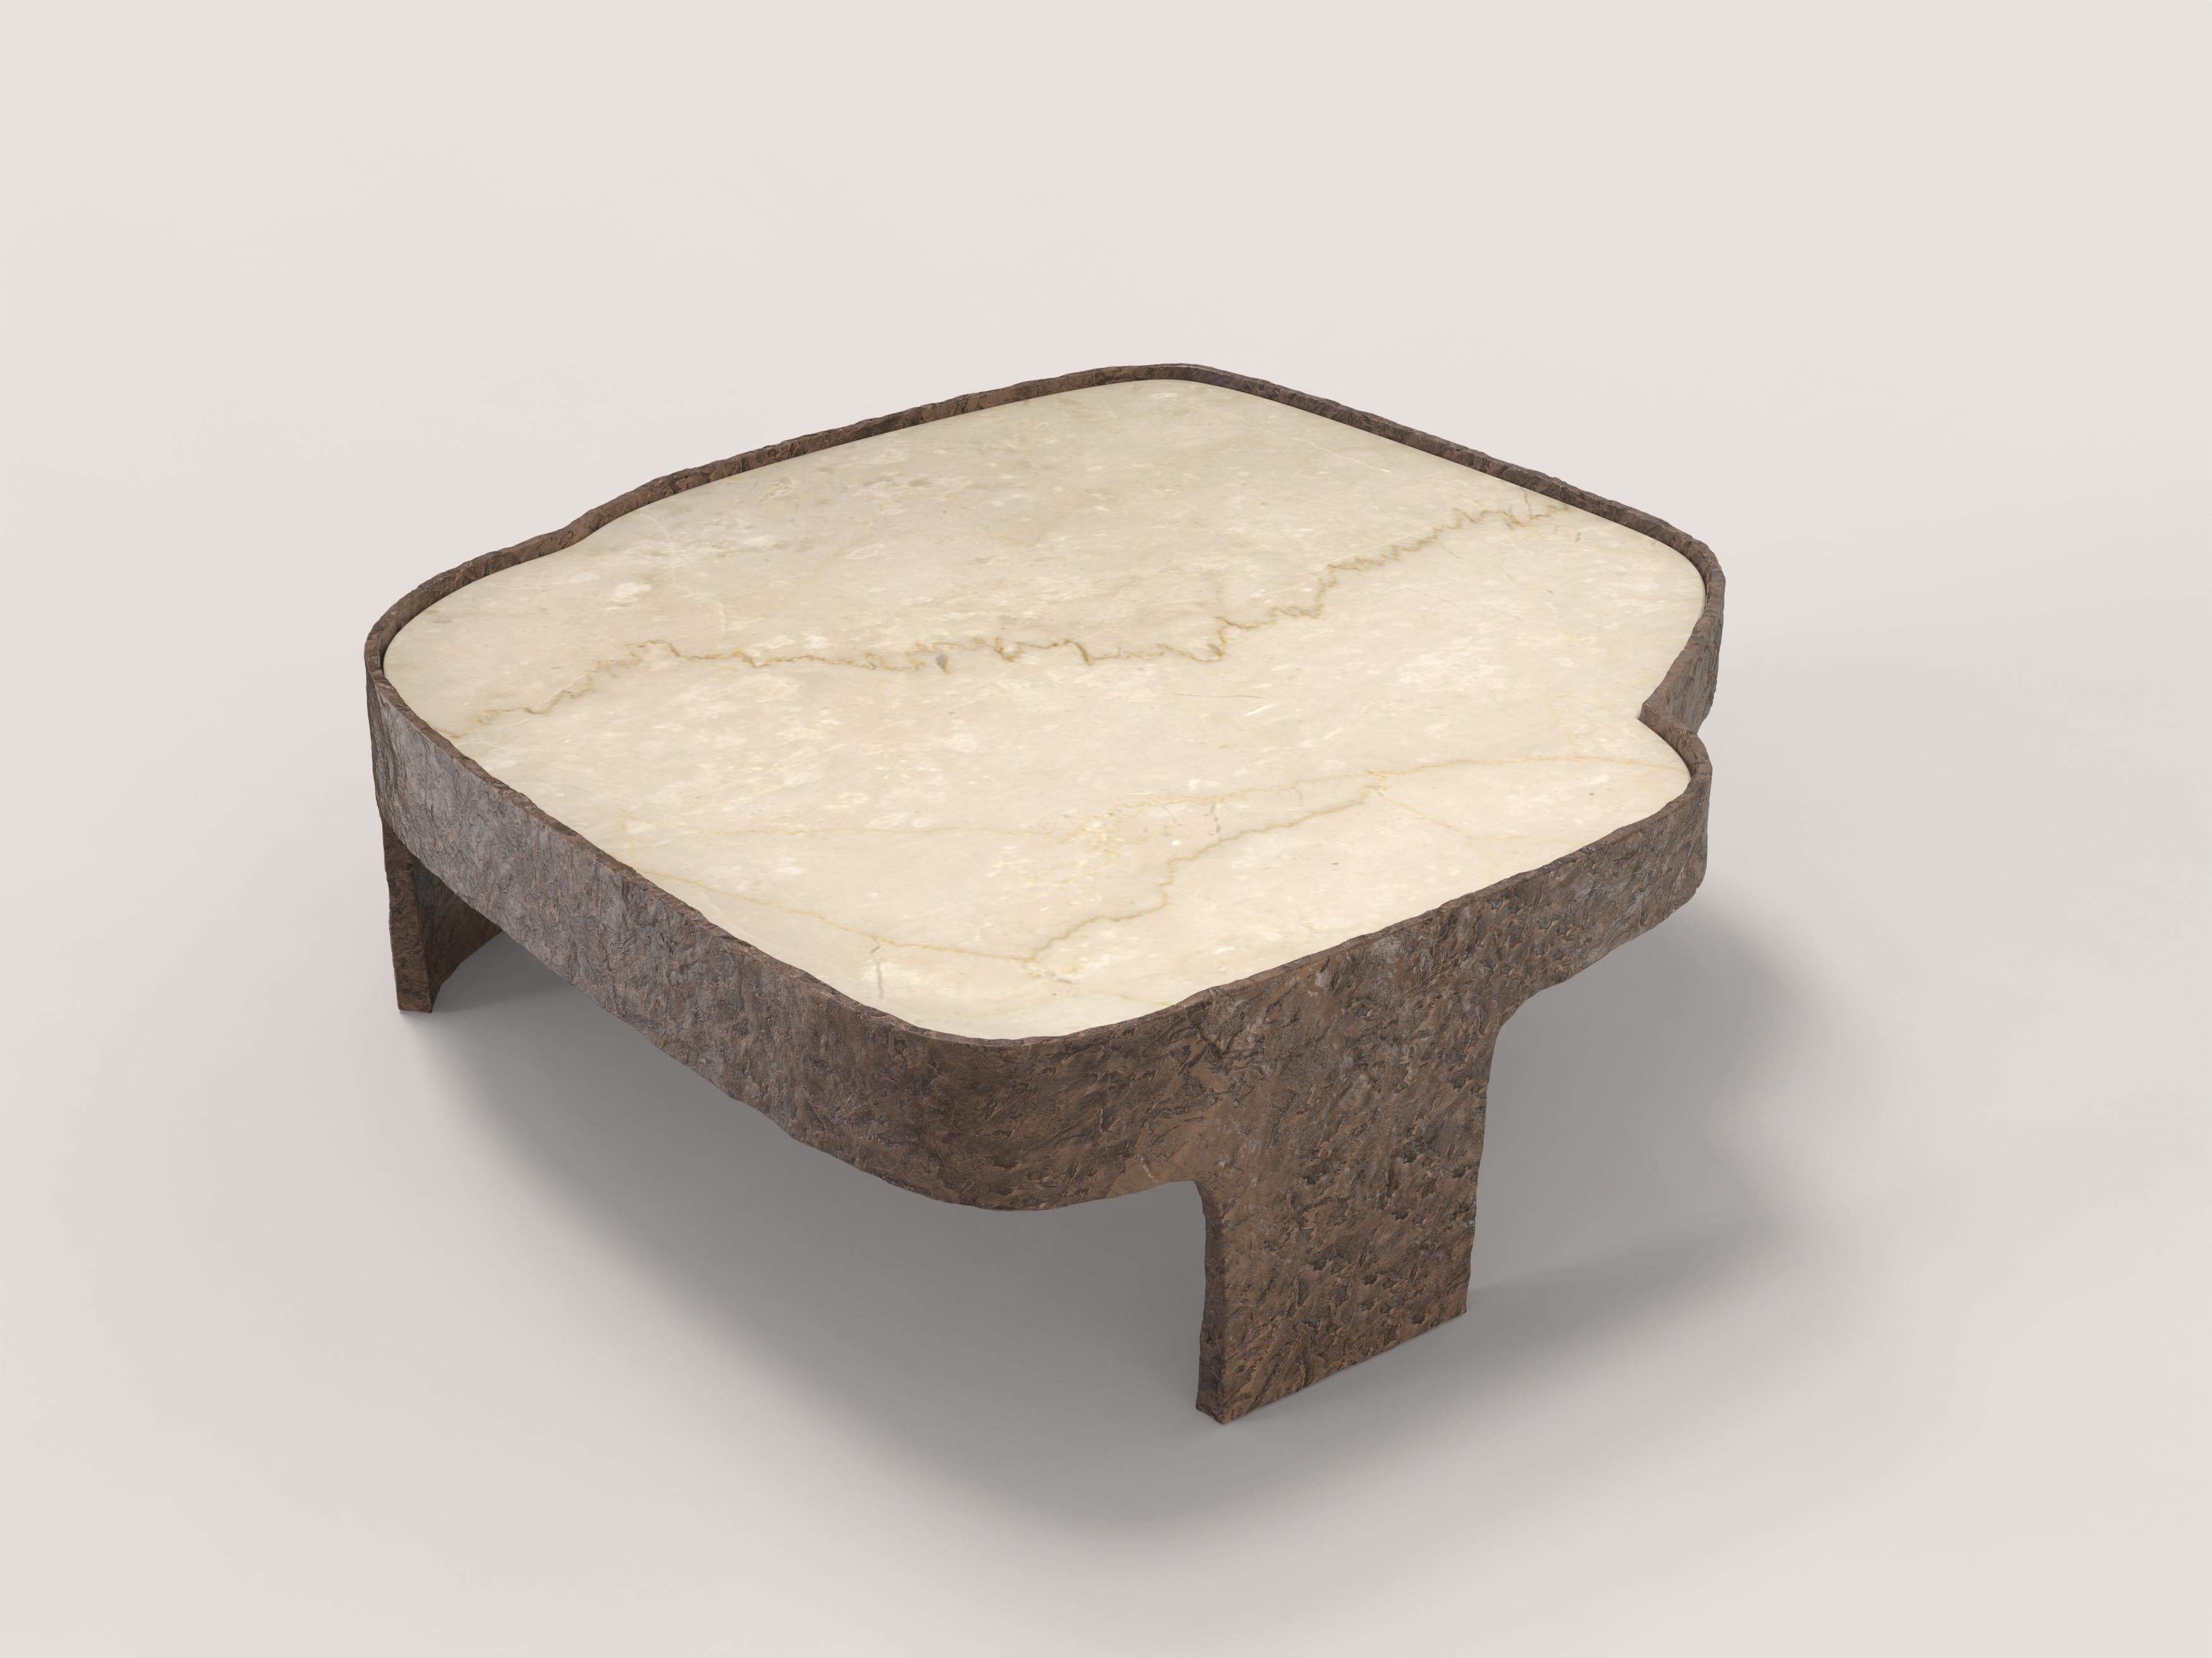 Cast Limited Edition Marble Bronze Table, Sumatra V2 by Edizione Limitata For Sale